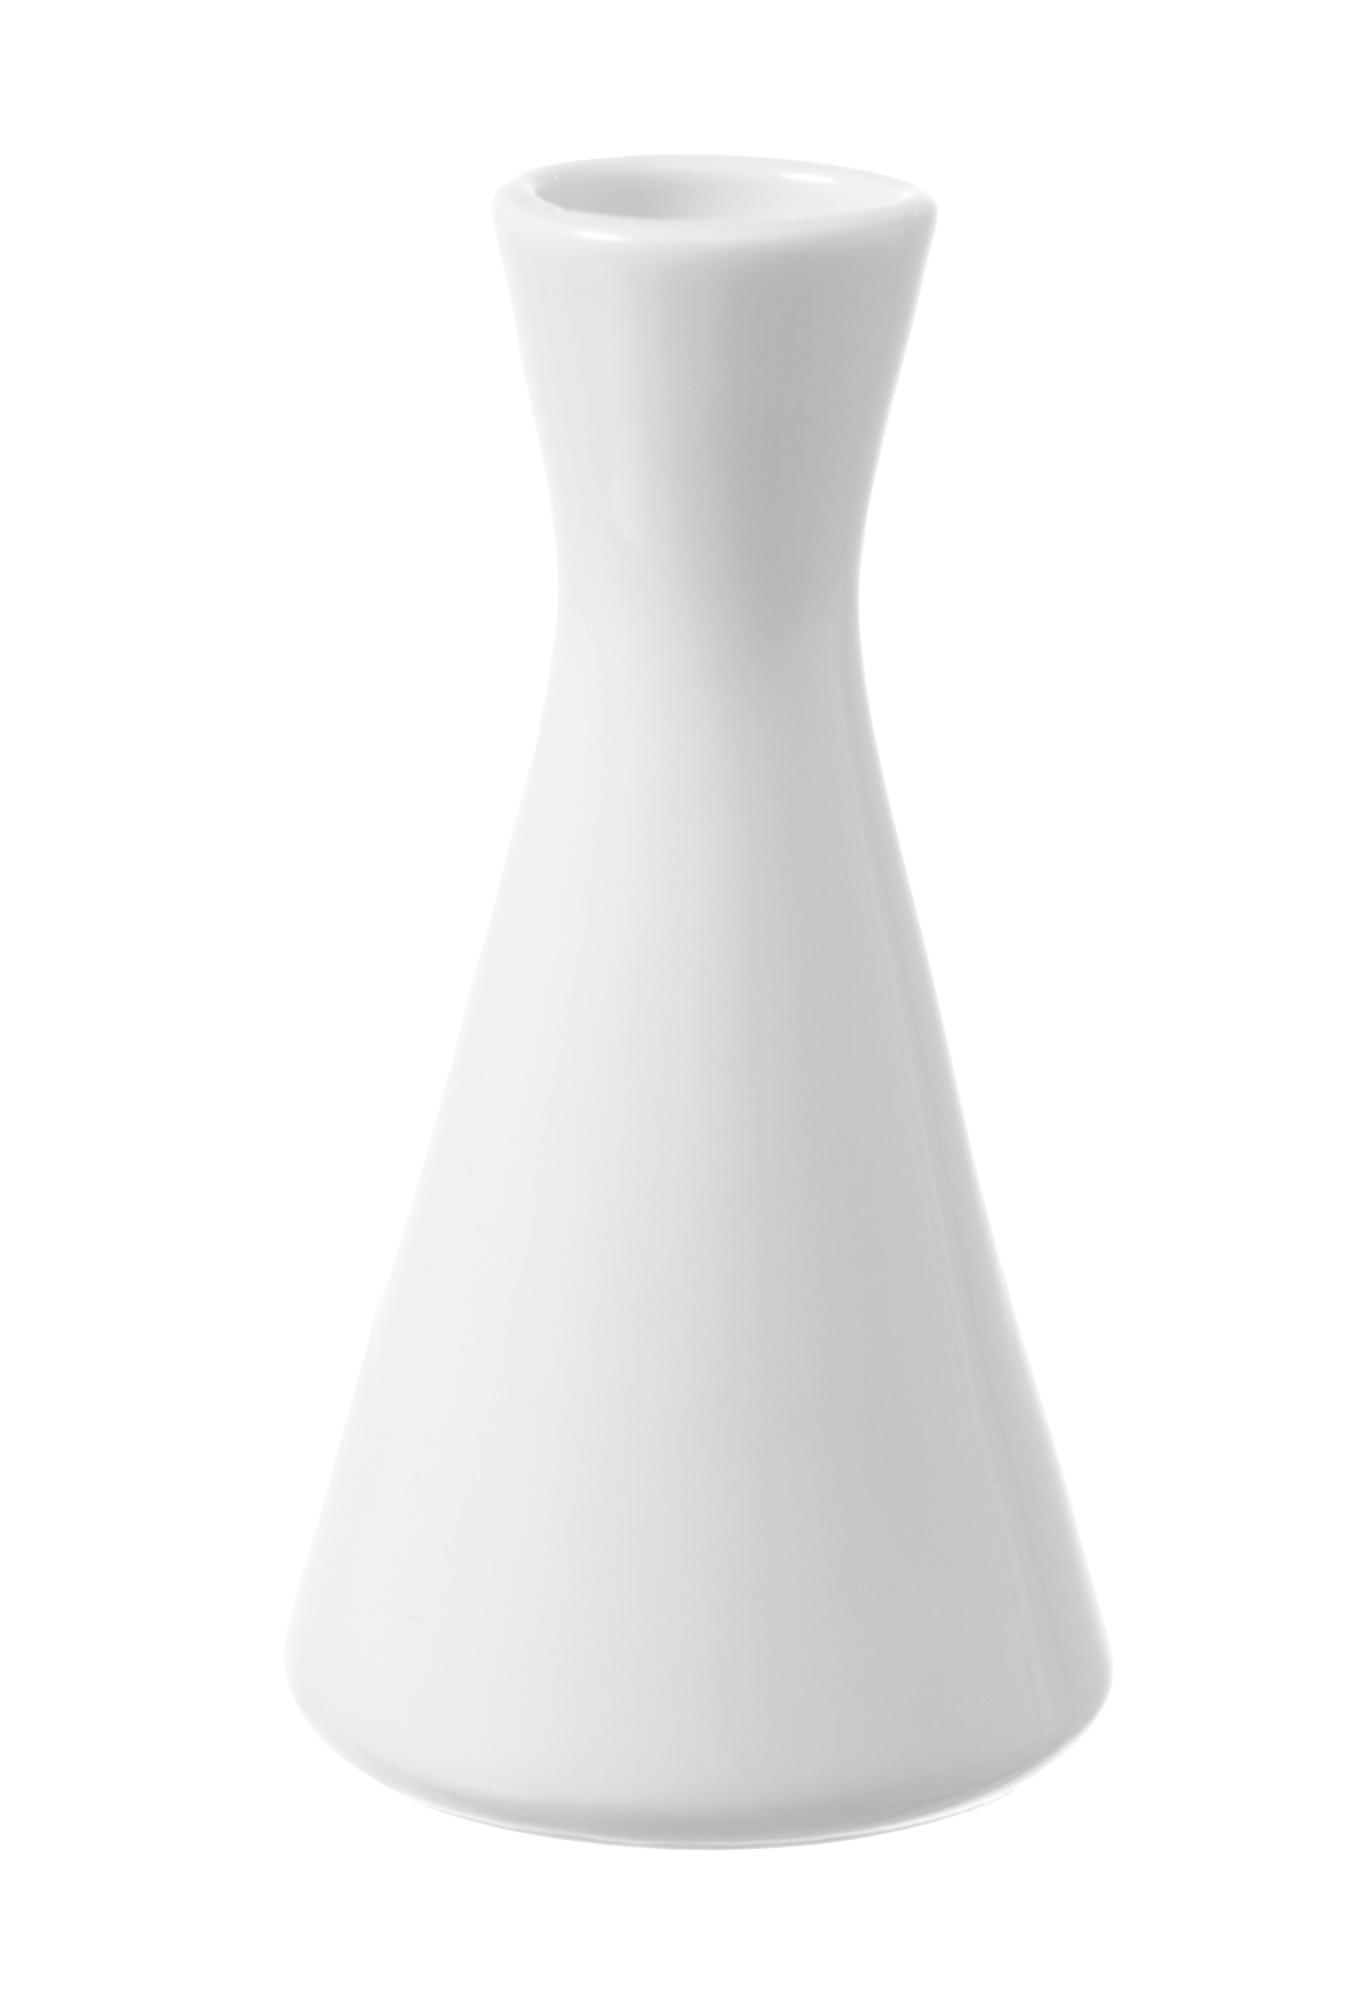 Bianco vase, 65x(H)125mm